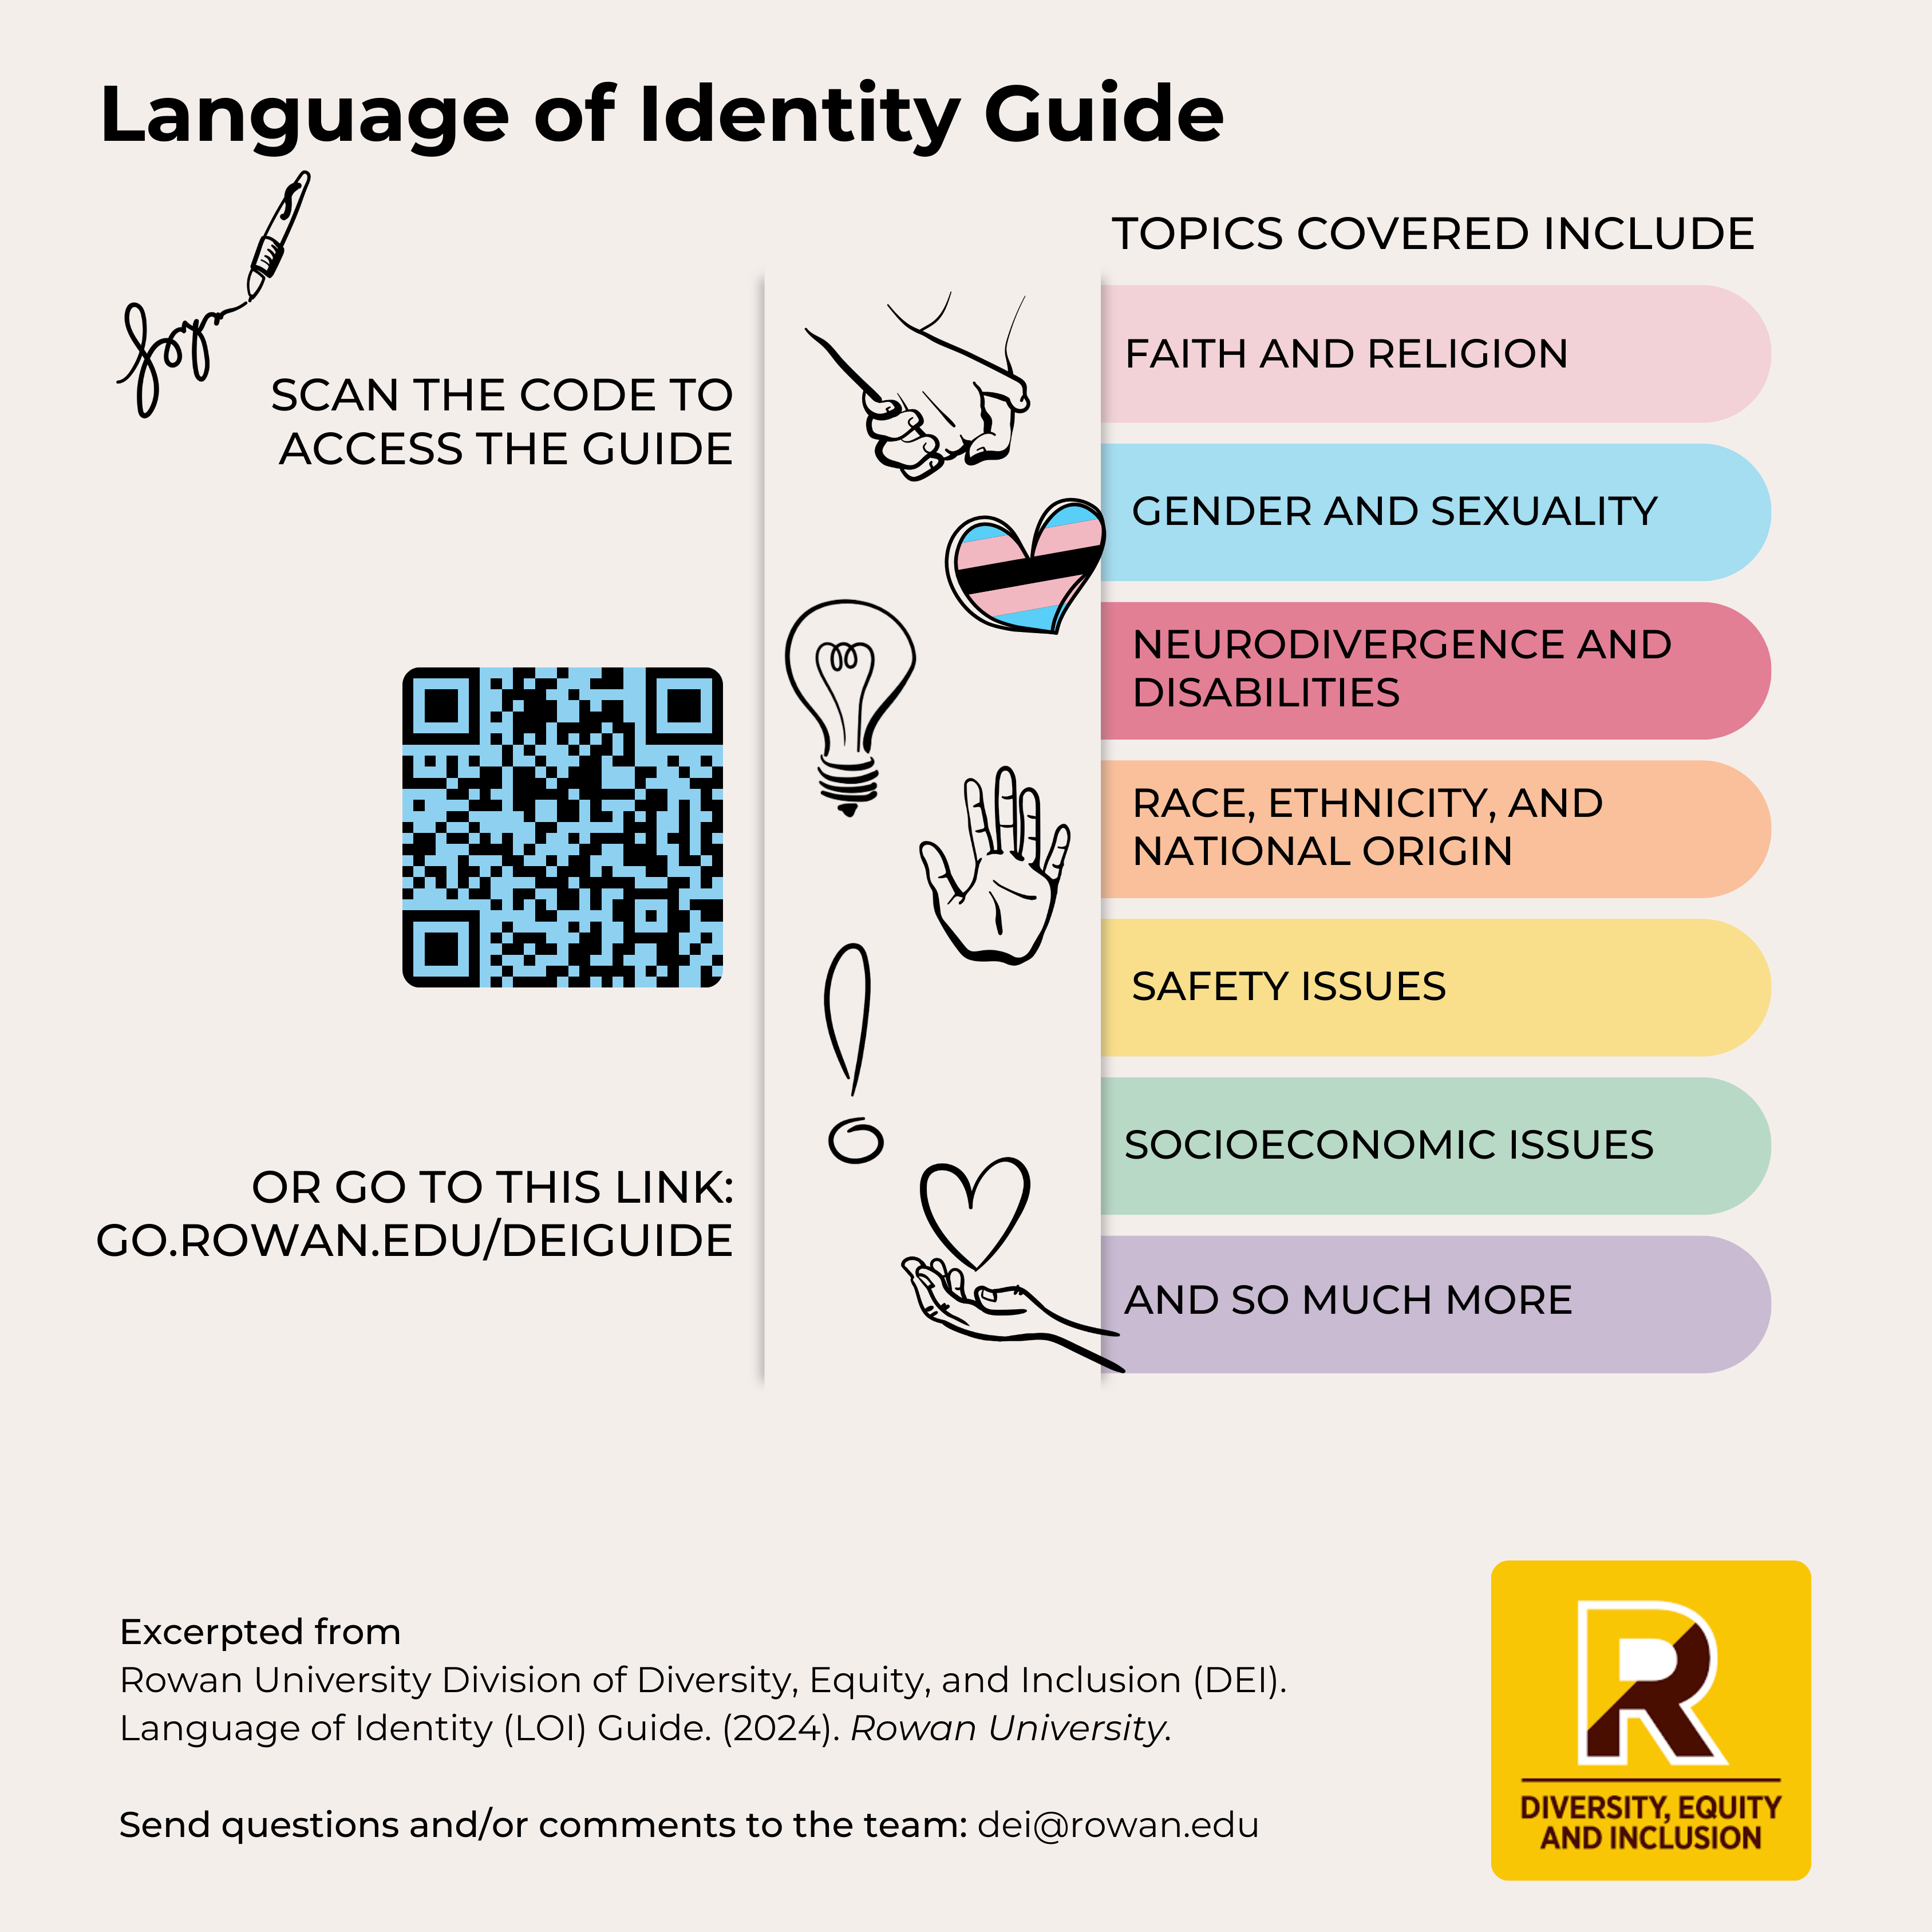 Rowan University DEI Language of Identity Guide Promotional Infographic